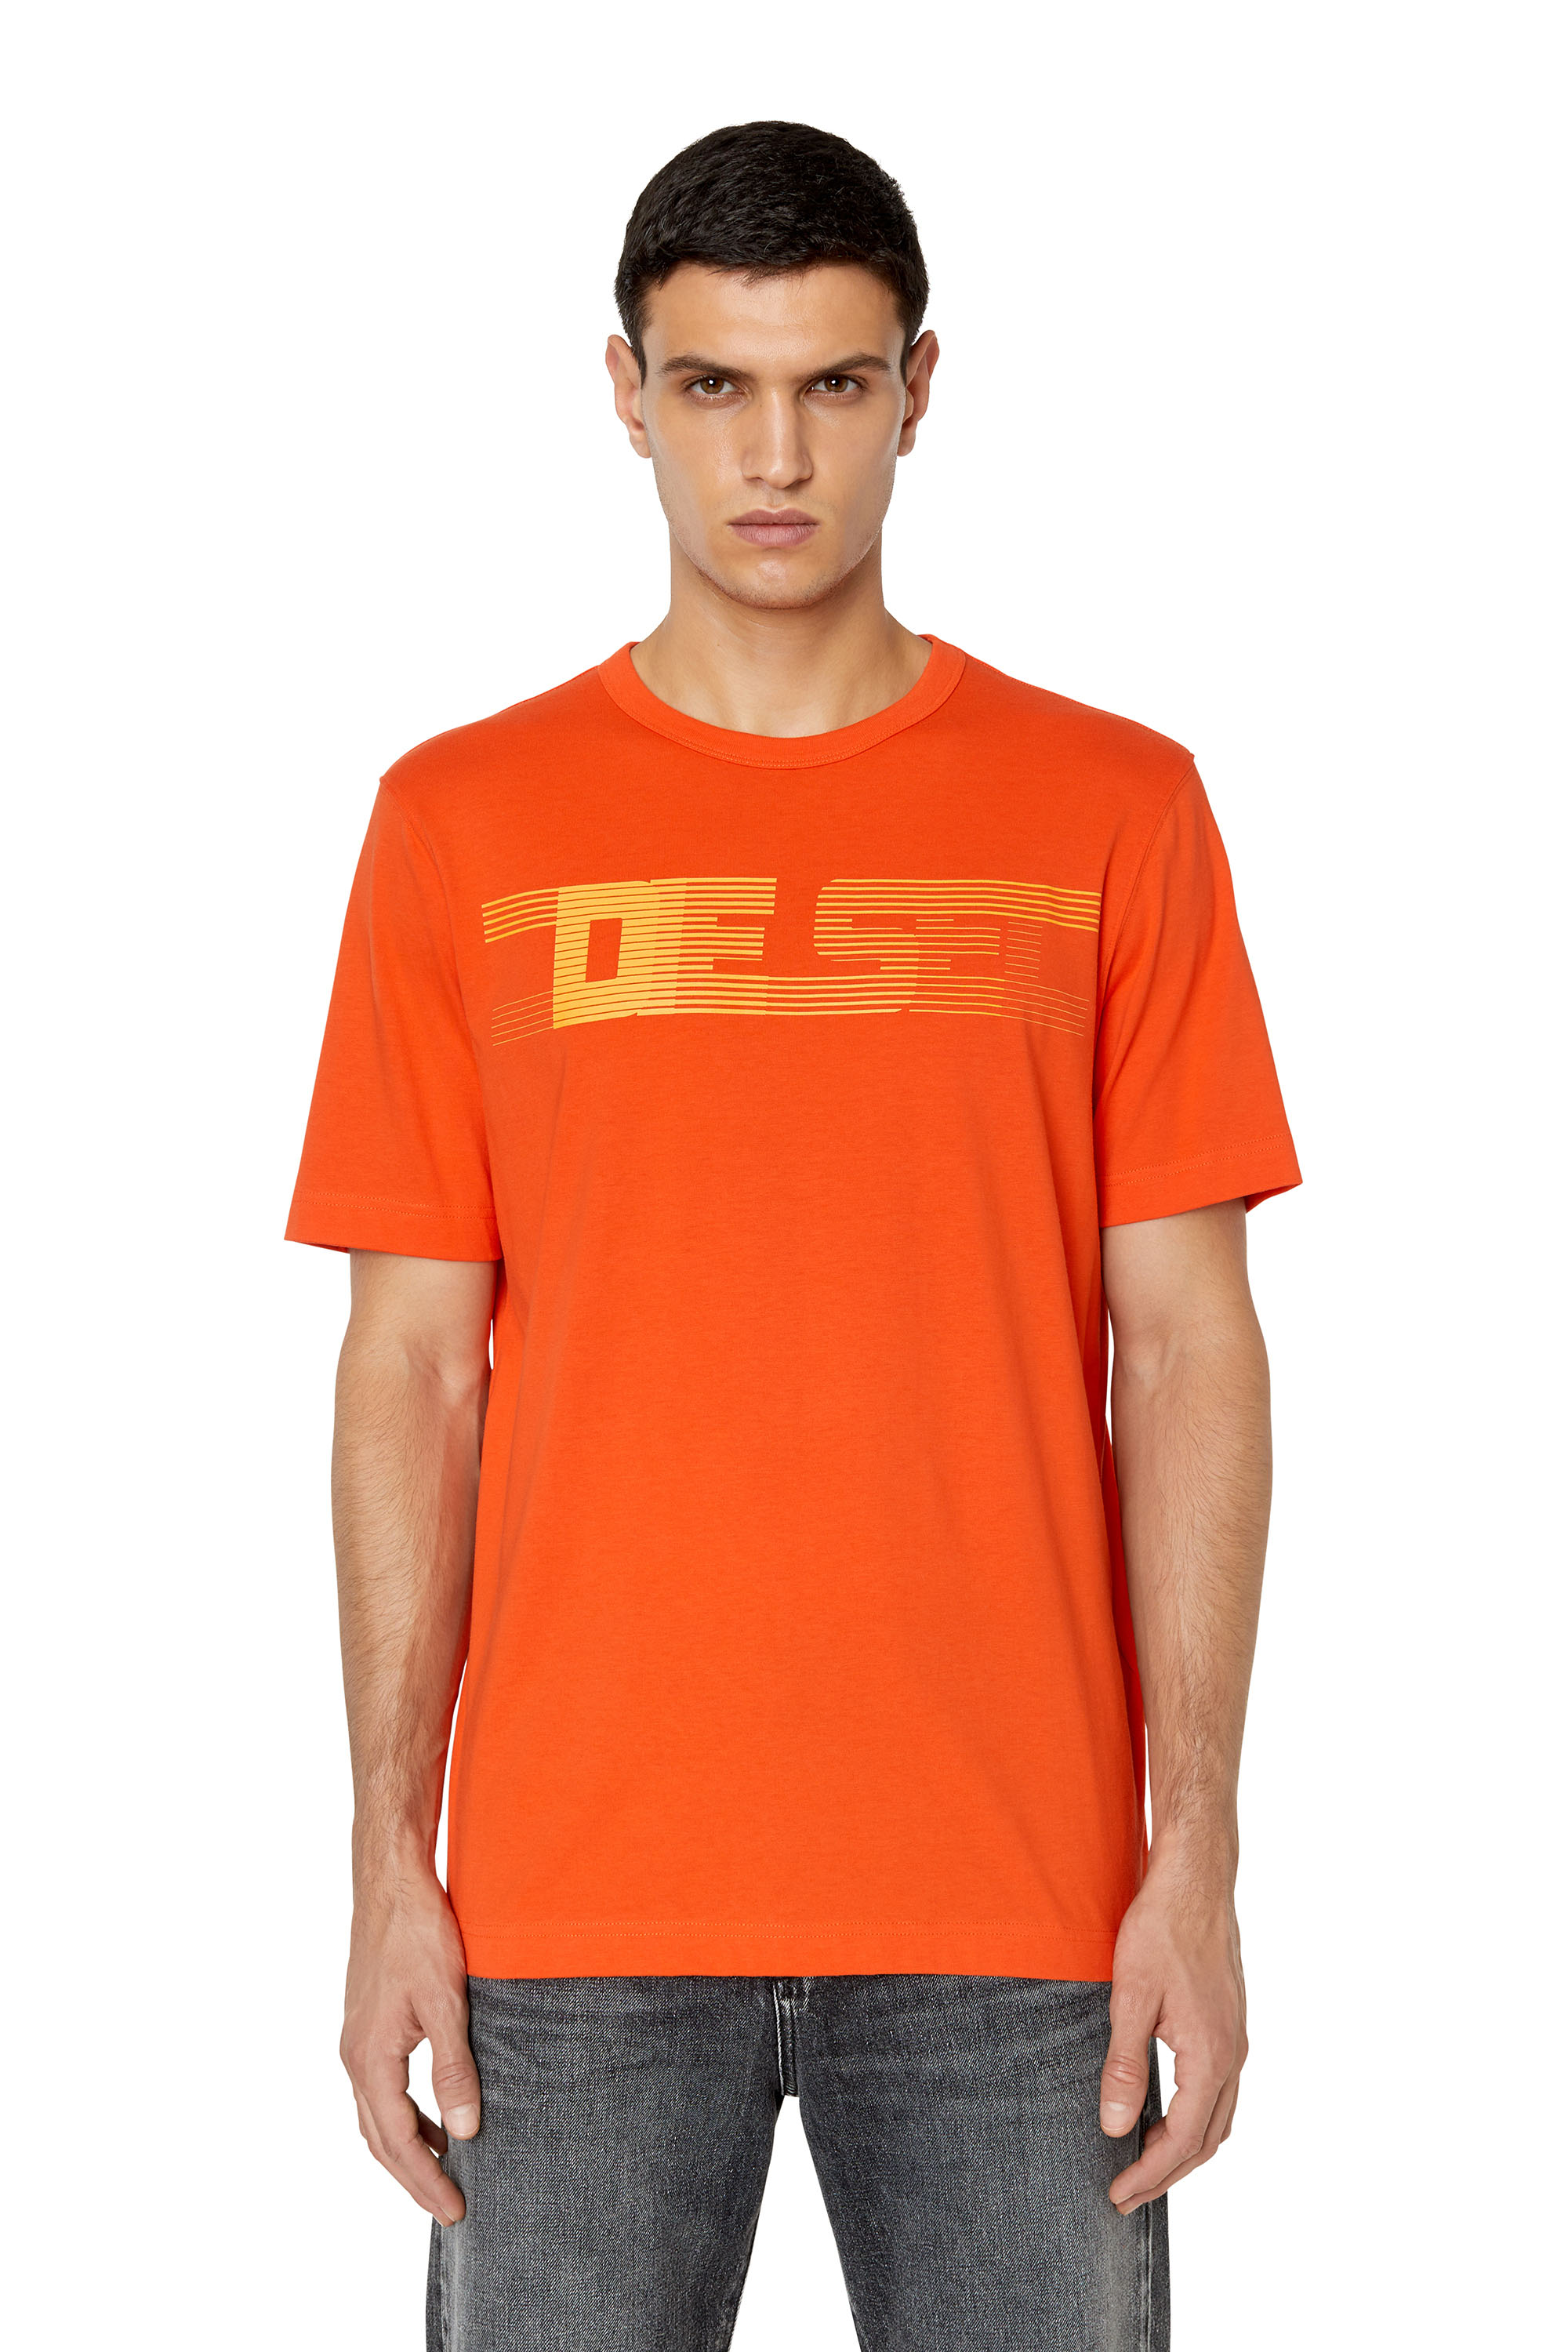 Diesel - T-JUST-E19, Orange - Image 1